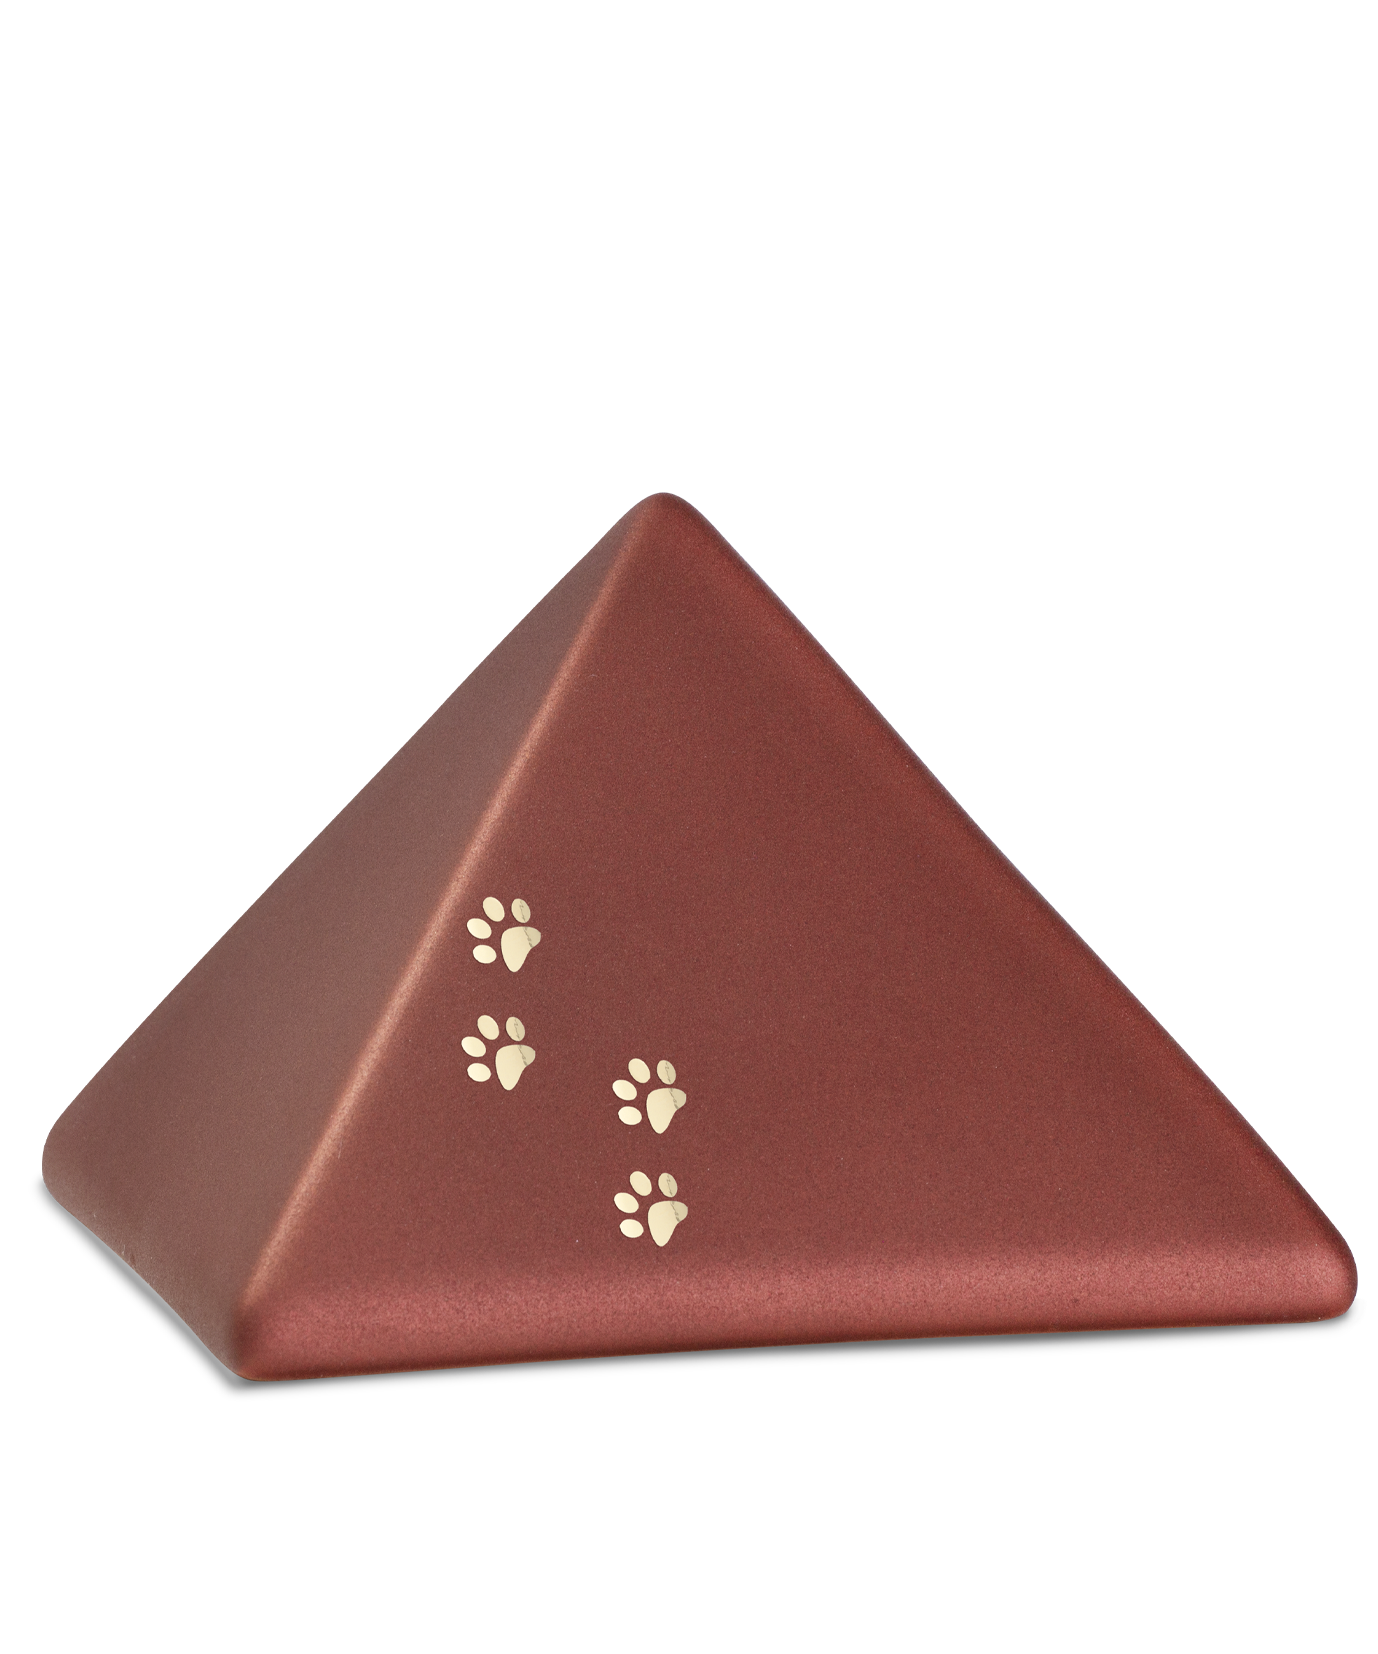 Tierurne - Keramik Pyramide rubin Pfoten 1500ml